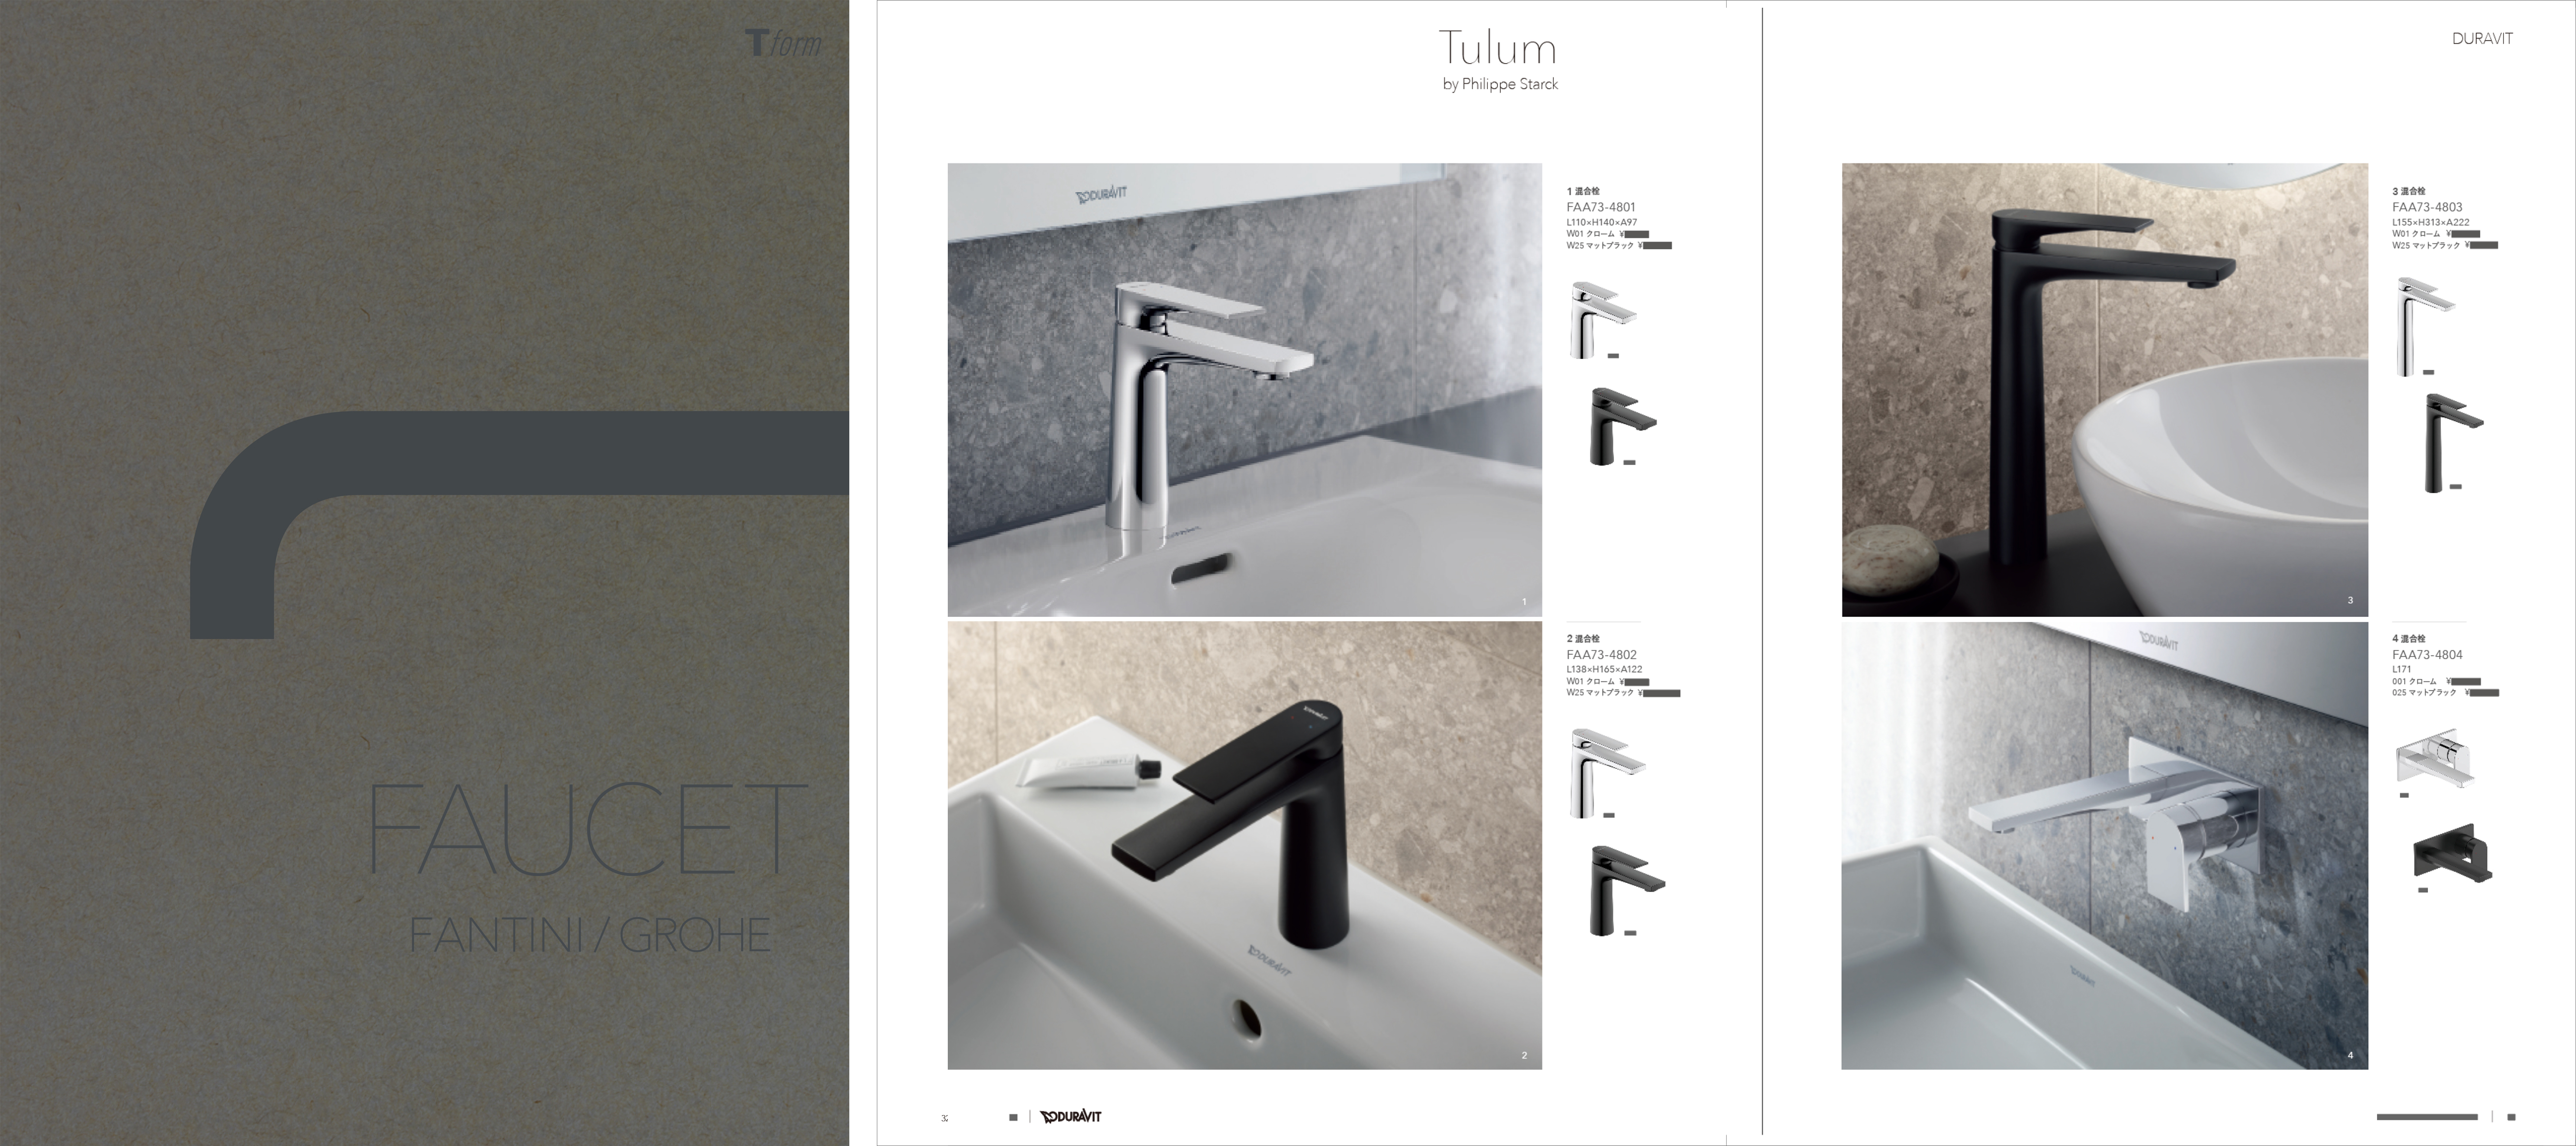 tform faucet catalogue and pricelist